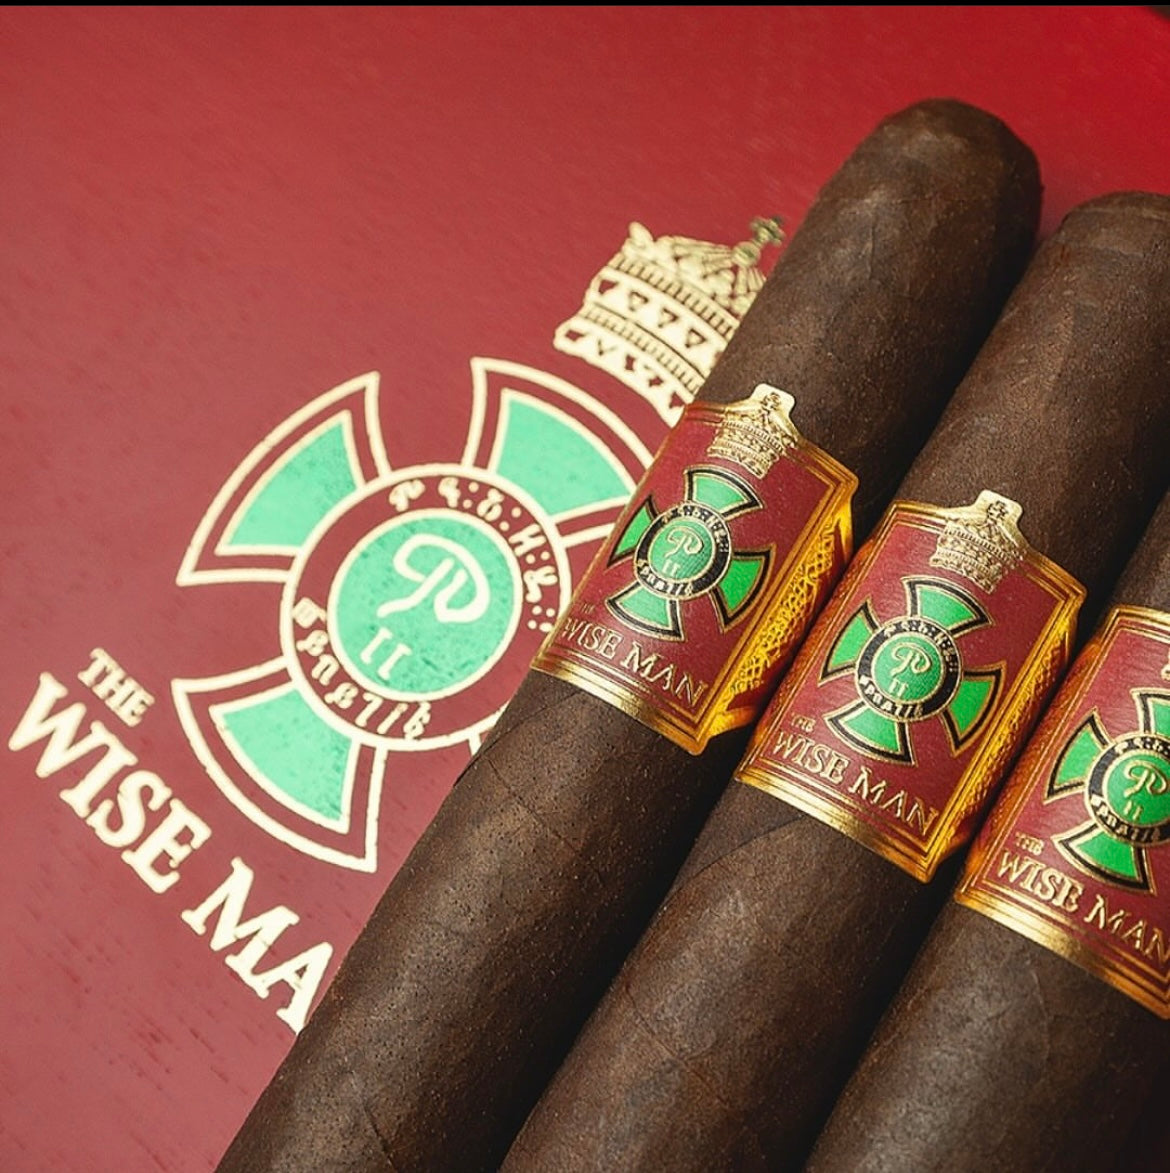 Foundation Cigars - The Wise Man Maduro Robusto